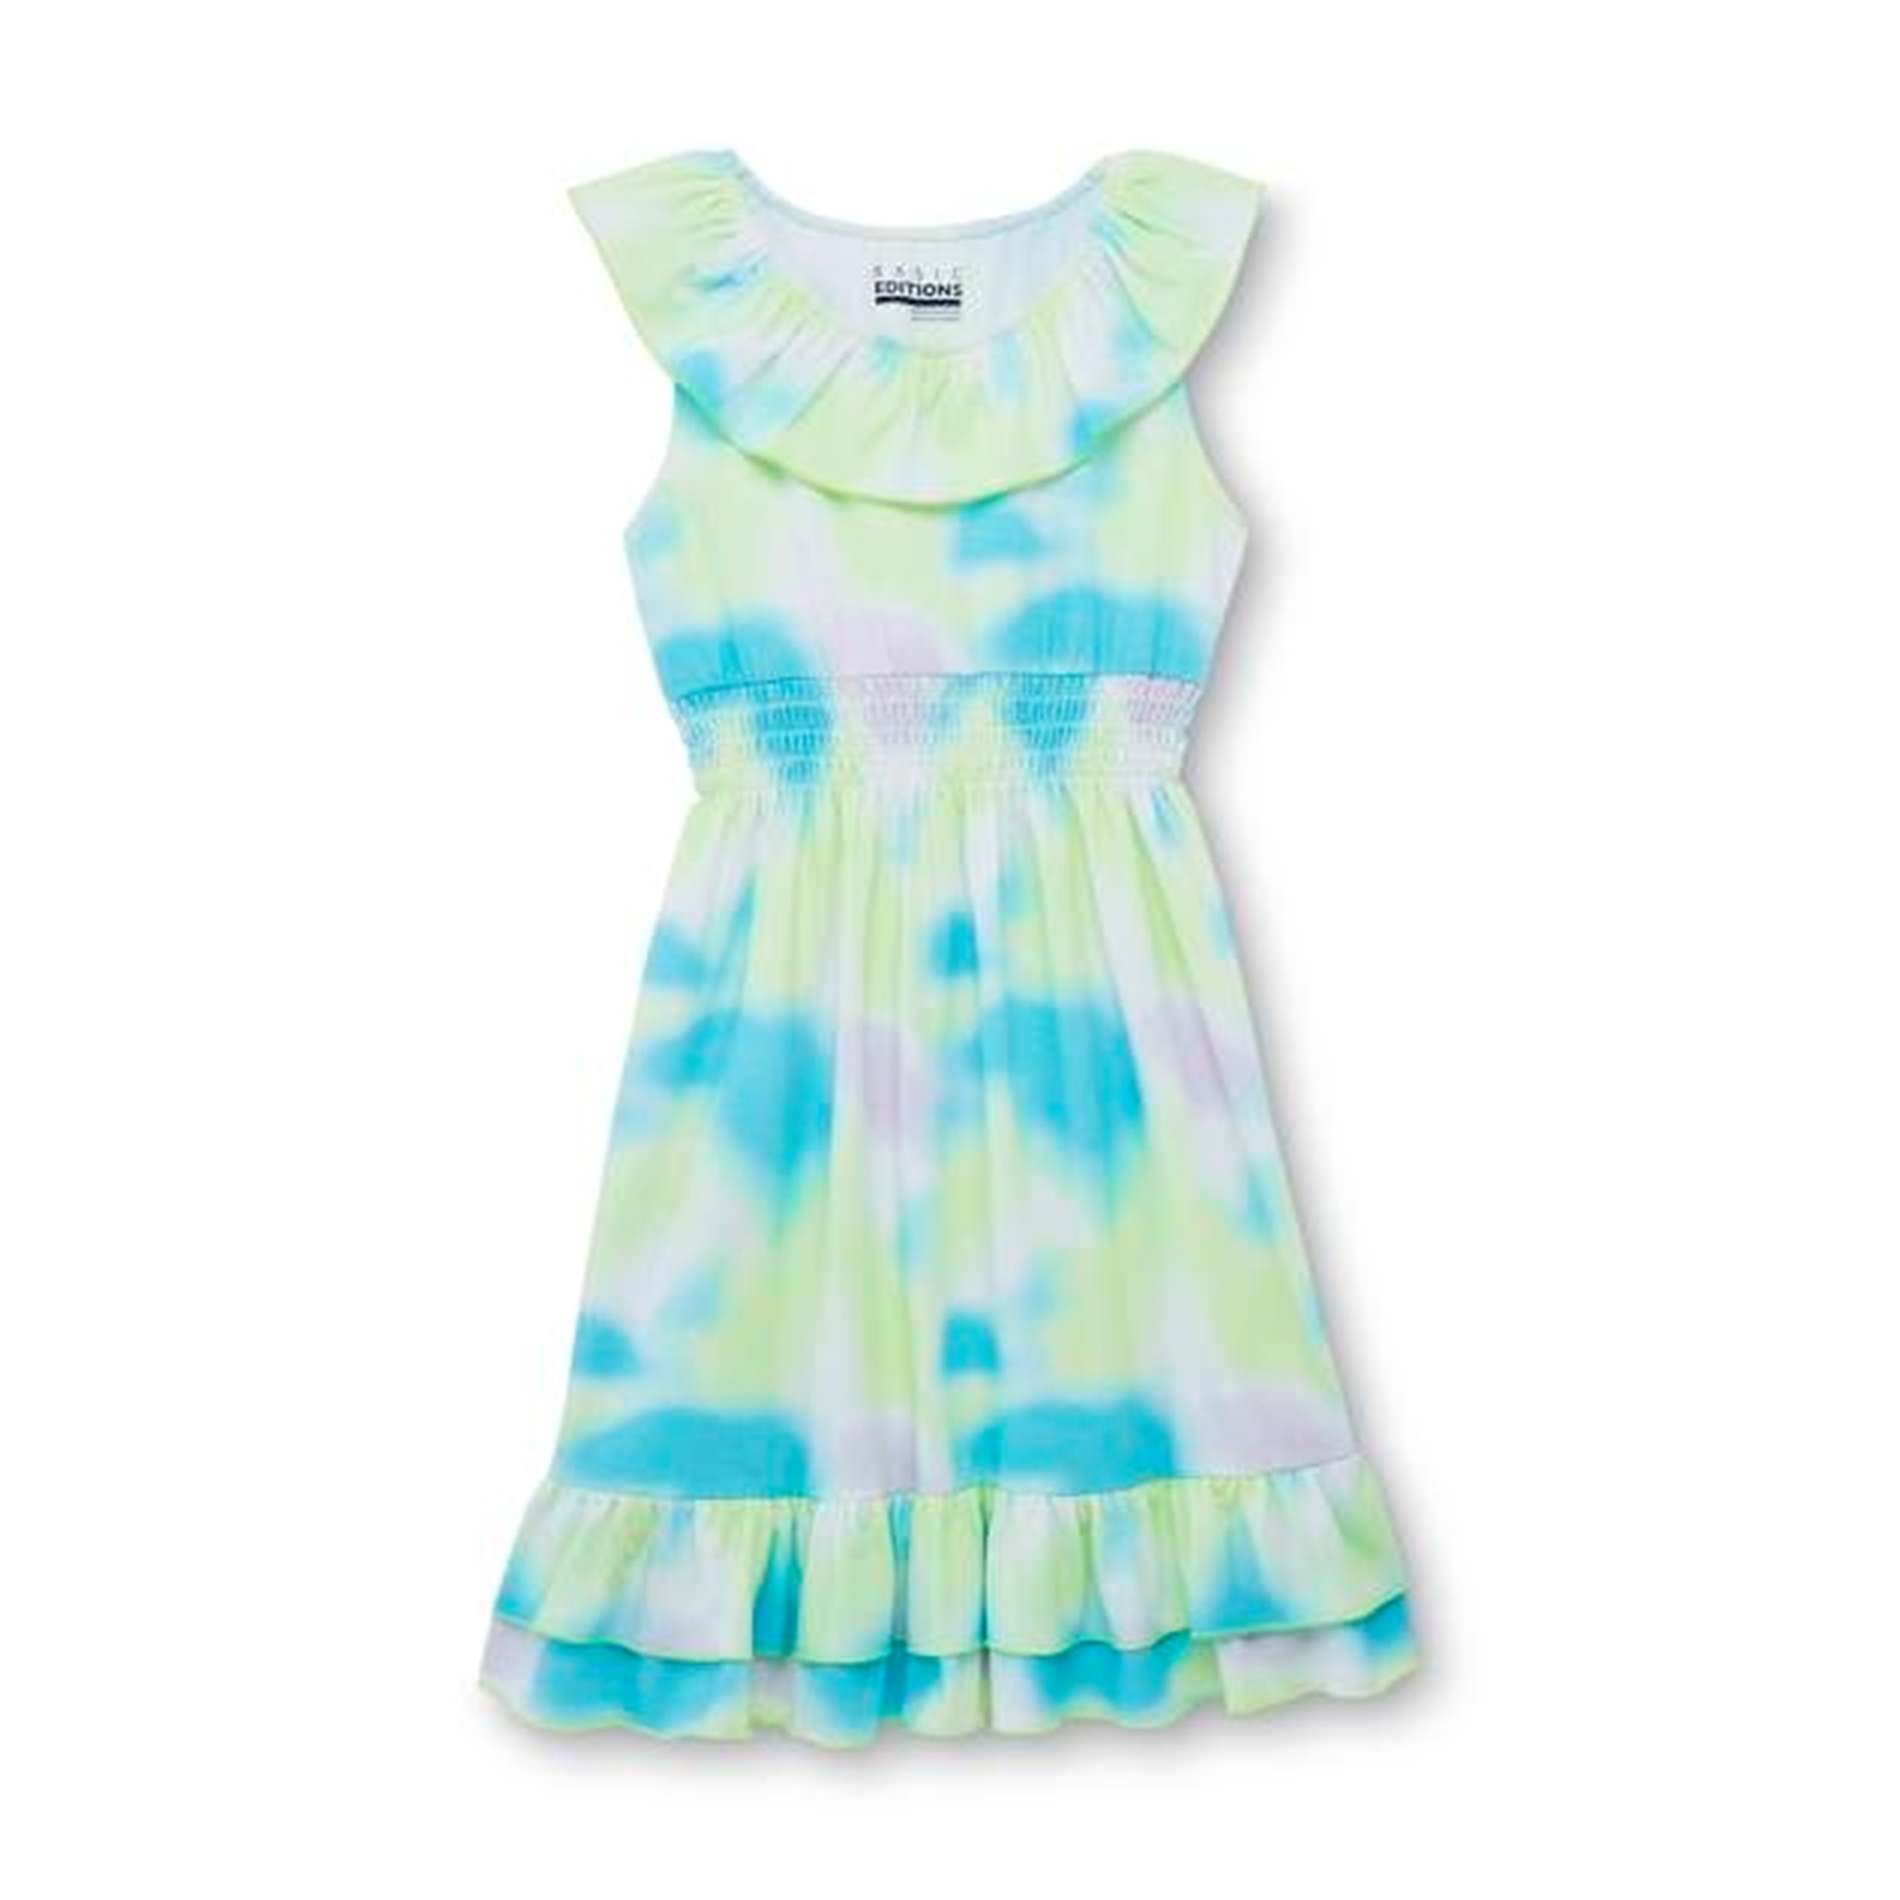 Basic Editions Girl's Ruffled Dress - Tie-Dye